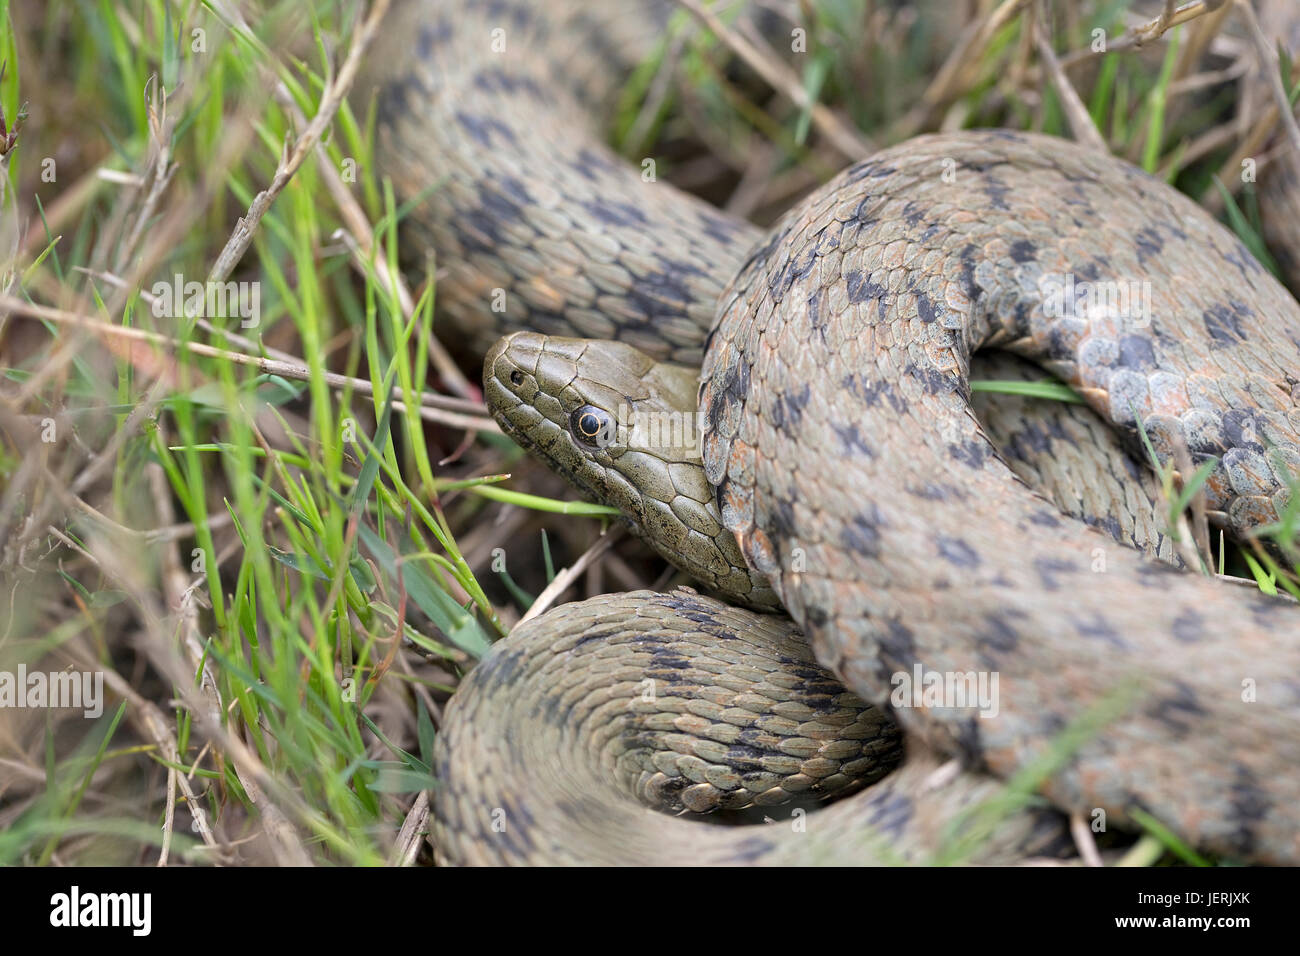 Dice Snake (Natrix tessellata) Stock Photo